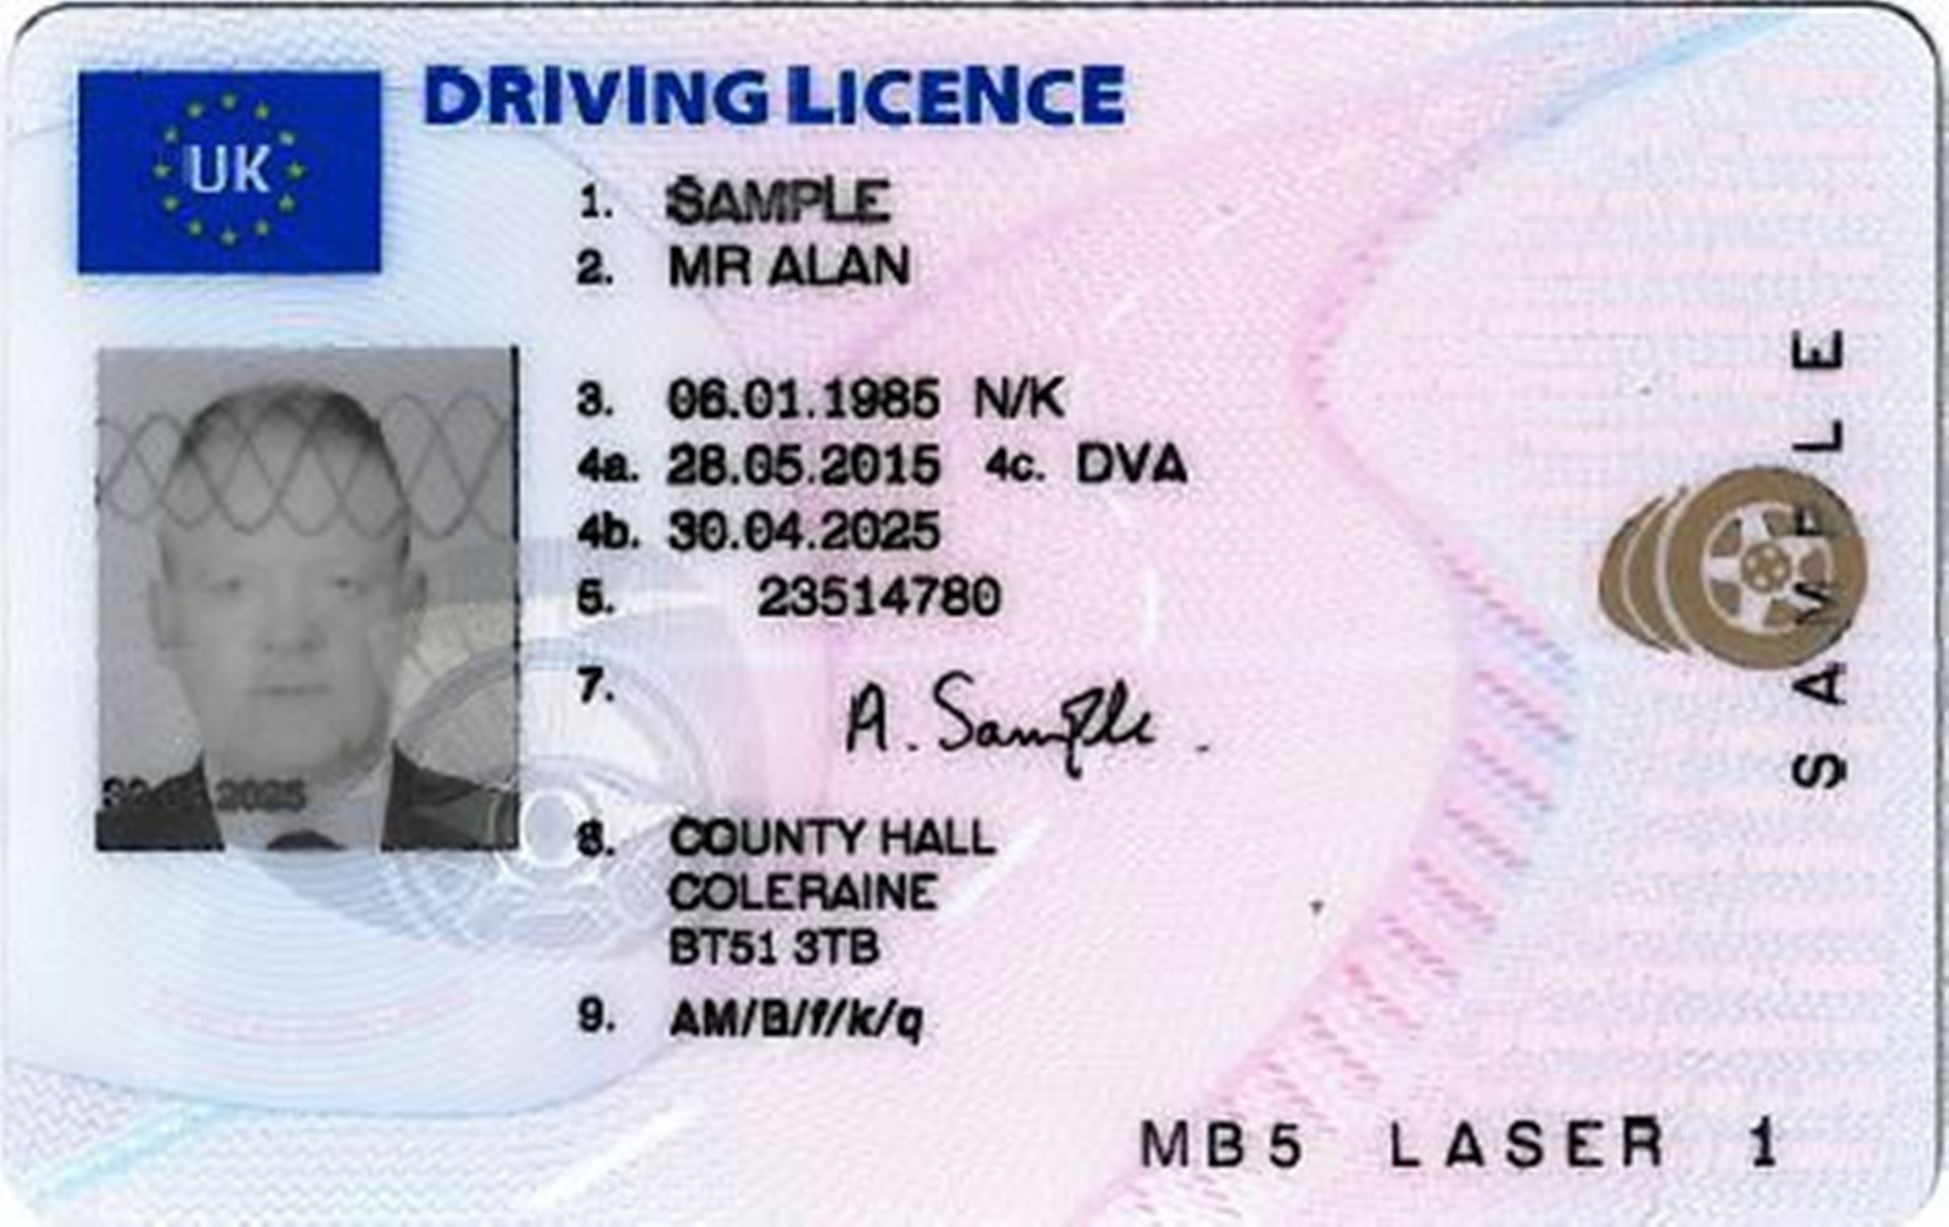 New Driver NI - Provisional Driving Licence